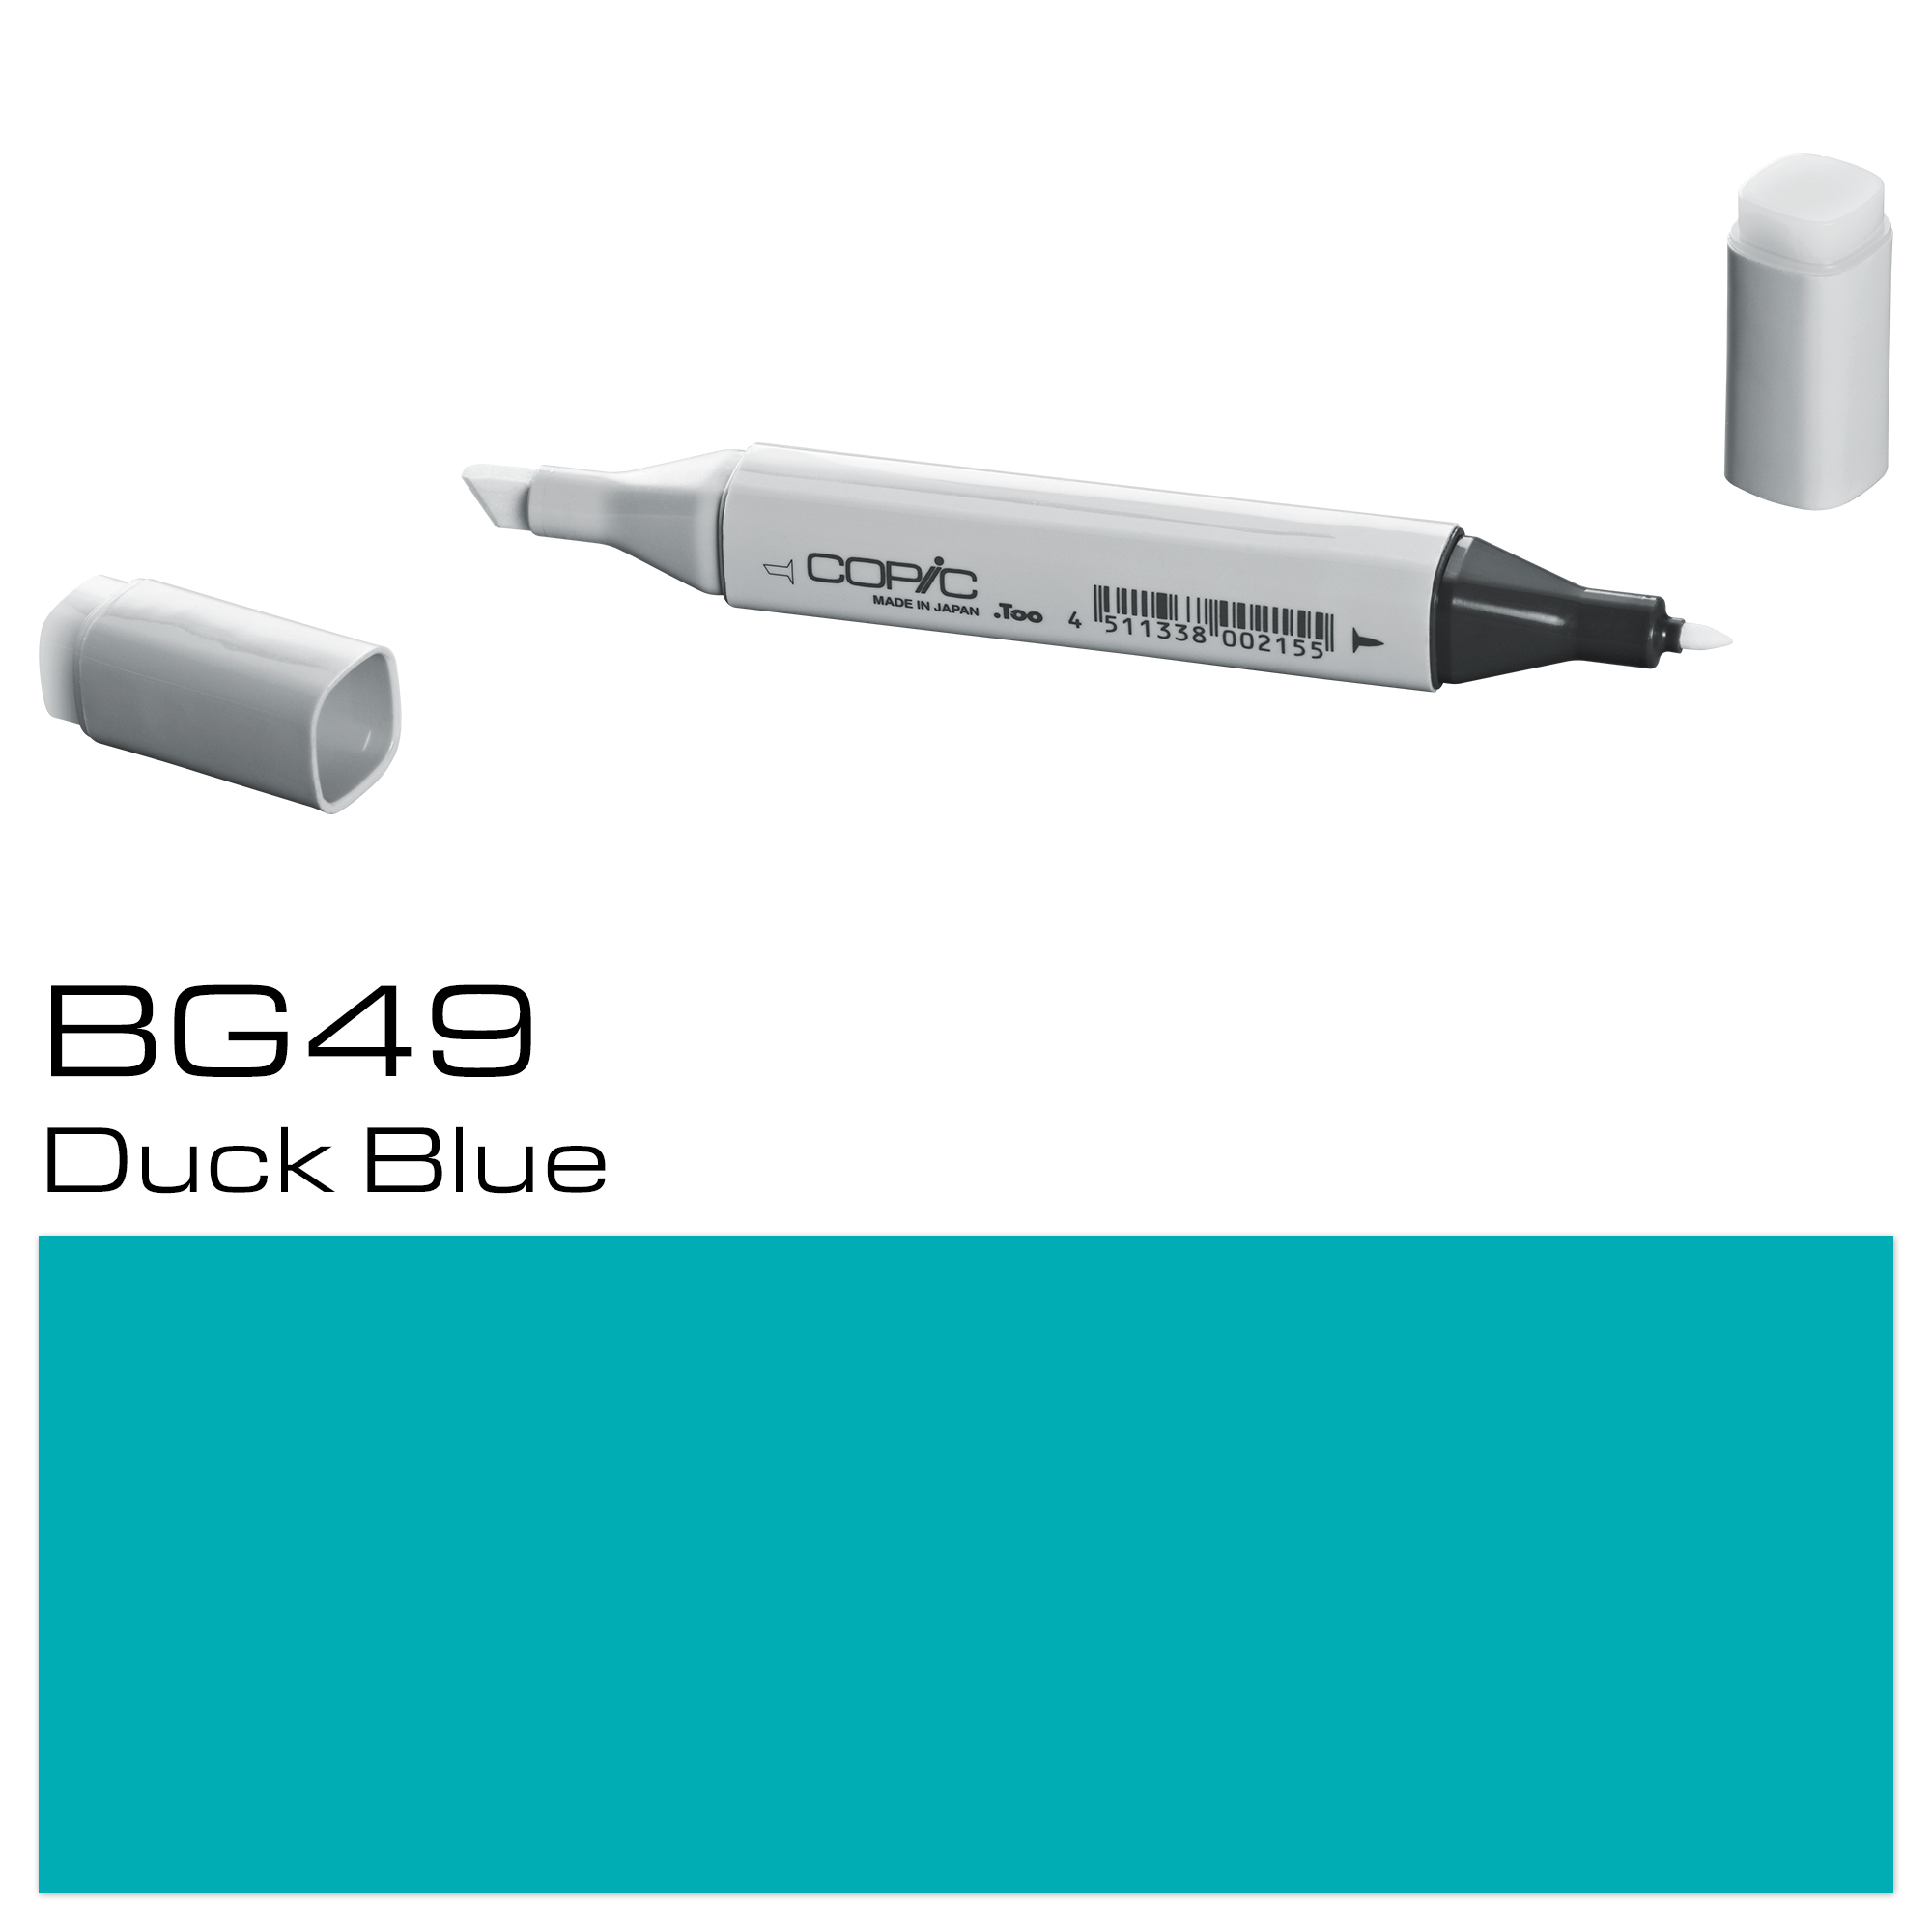 COPIC MARKER DUCK BLUE BG49